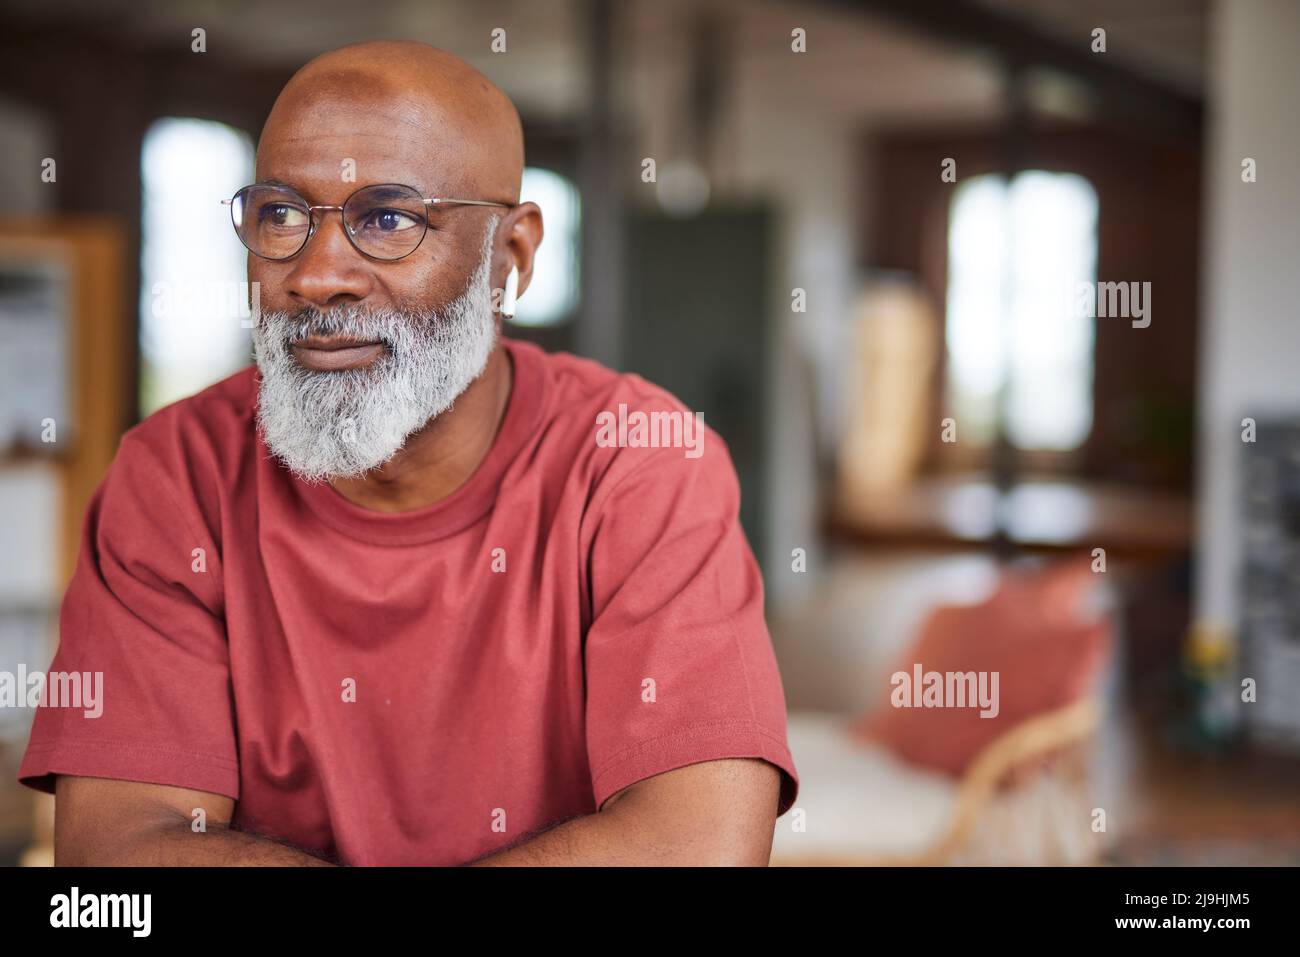 Mature man with grey beard sitting at home Stock Photo